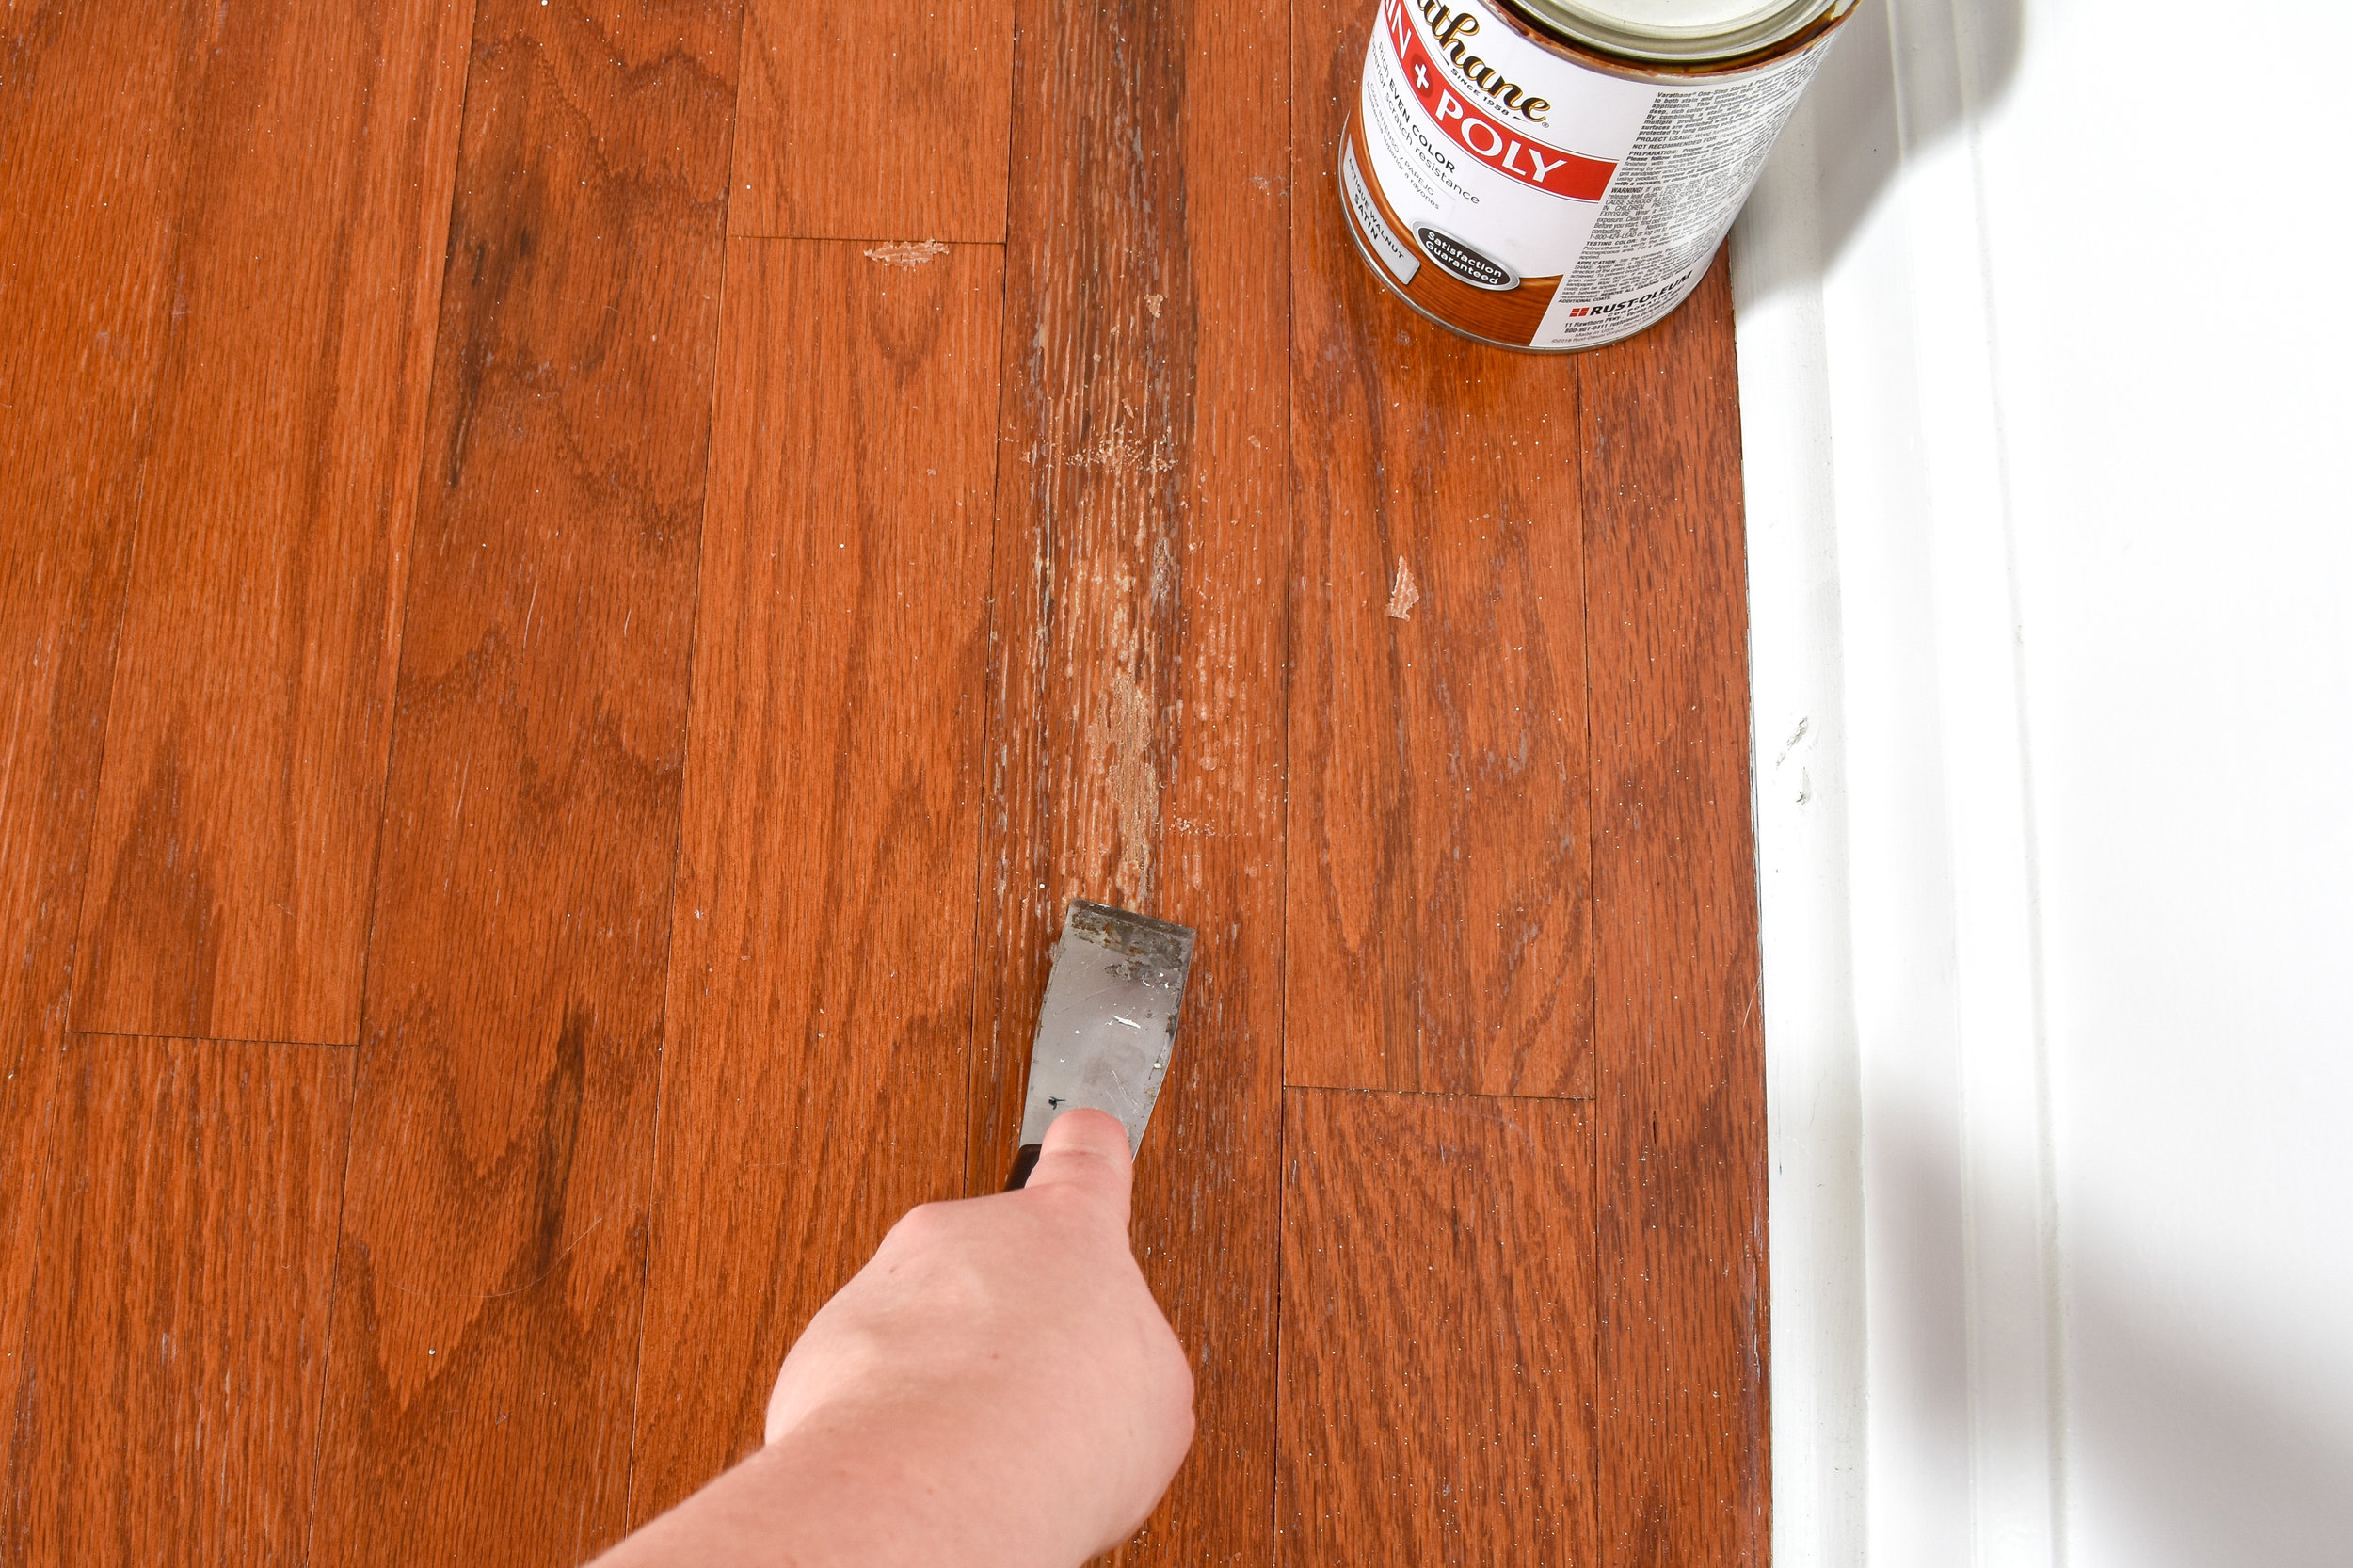 How To Make Old Hardwood Floors Shine, Cleaning Prefinished Hardwood Floors